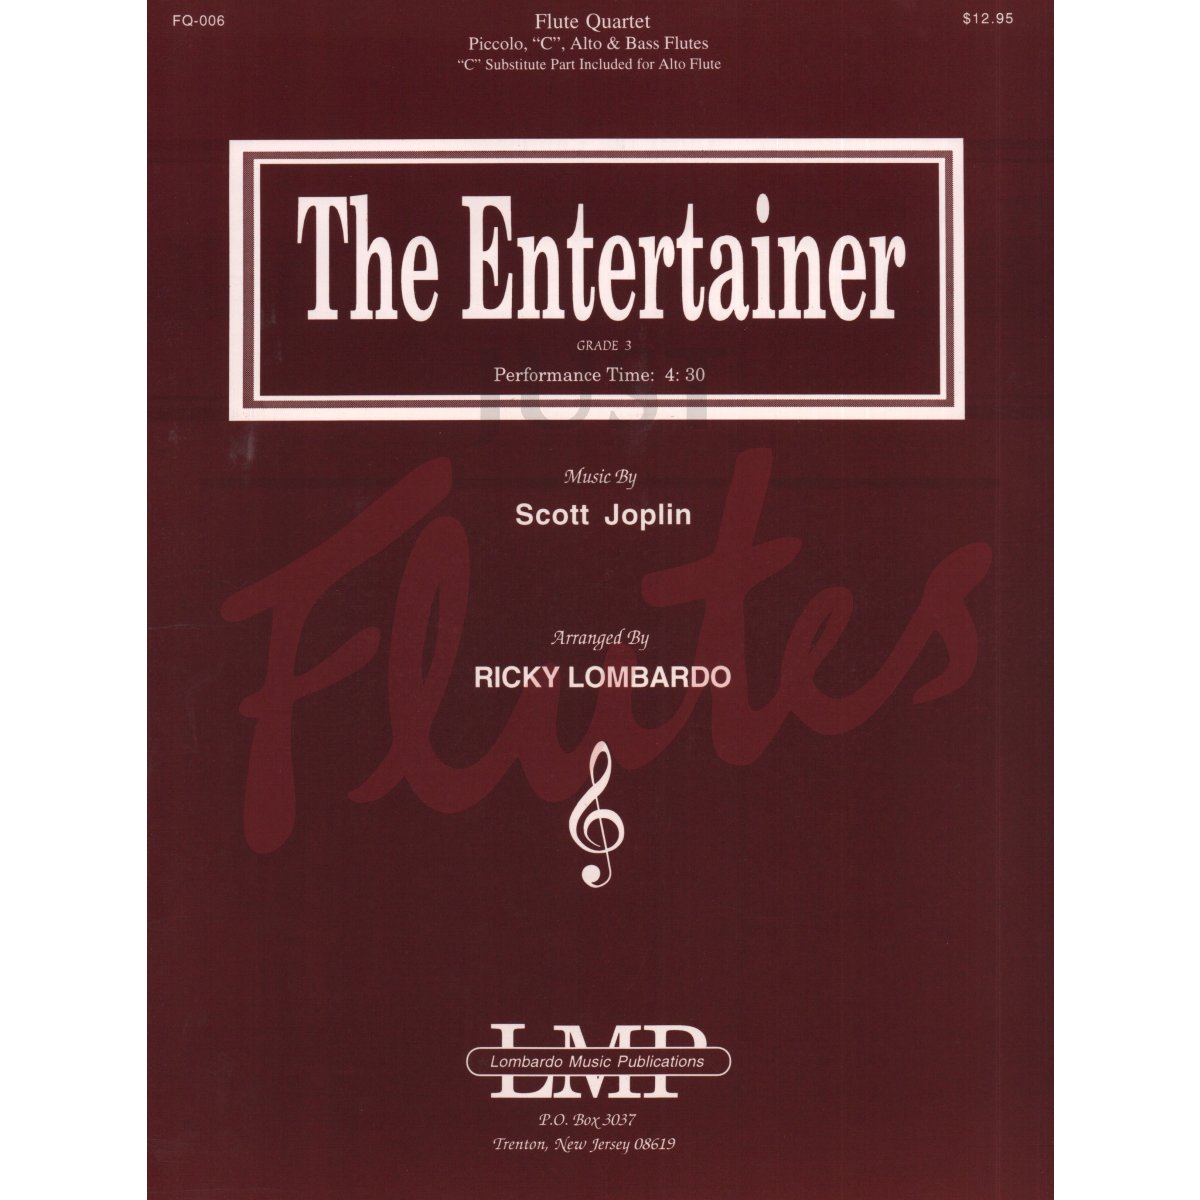 The Entertainer [Mixed Flute Quartet]